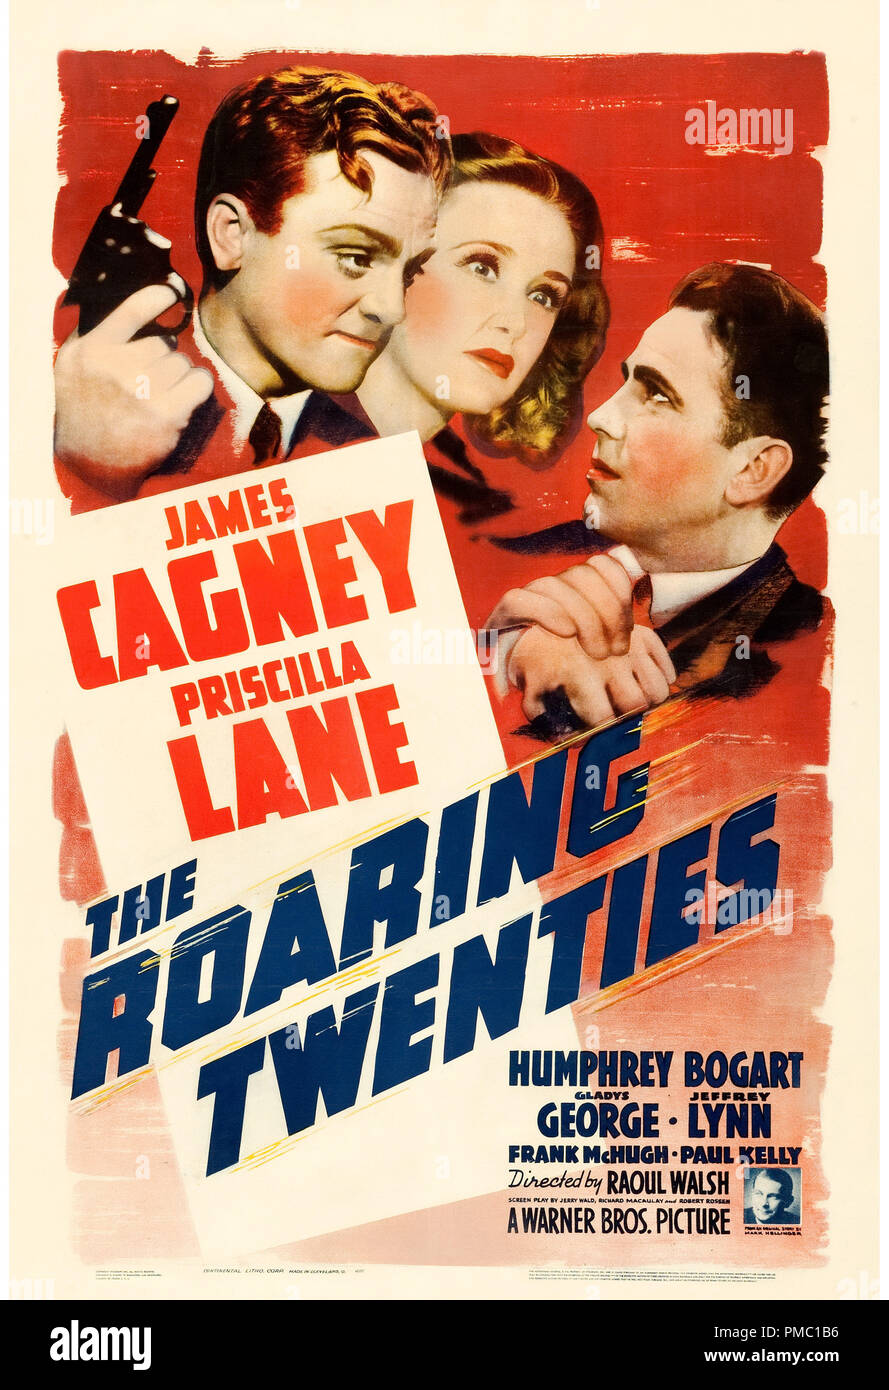 Humphrey Bogart, James Cagney, die Roaring Twenties (Warner Brothers, 1939). Poster Datei Referenz # 33595 324 THA Stockfoto